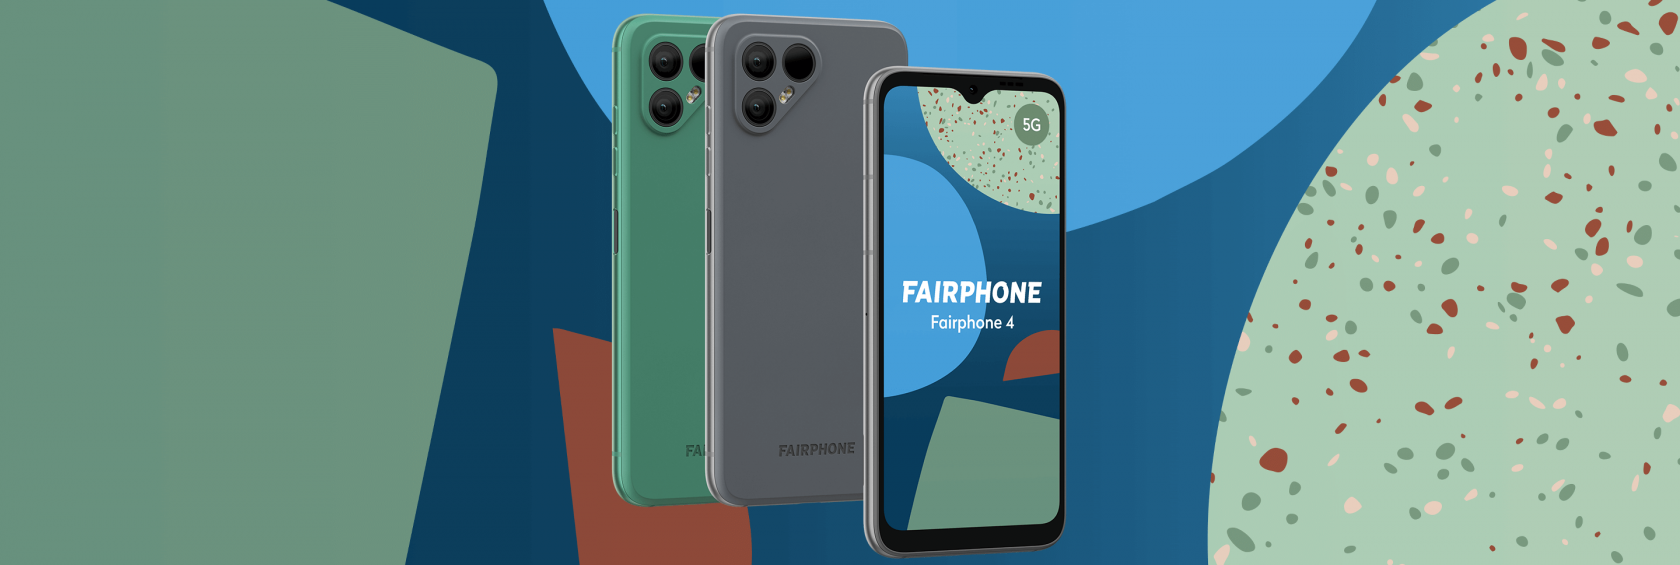 Fairphone 4 mobile phone